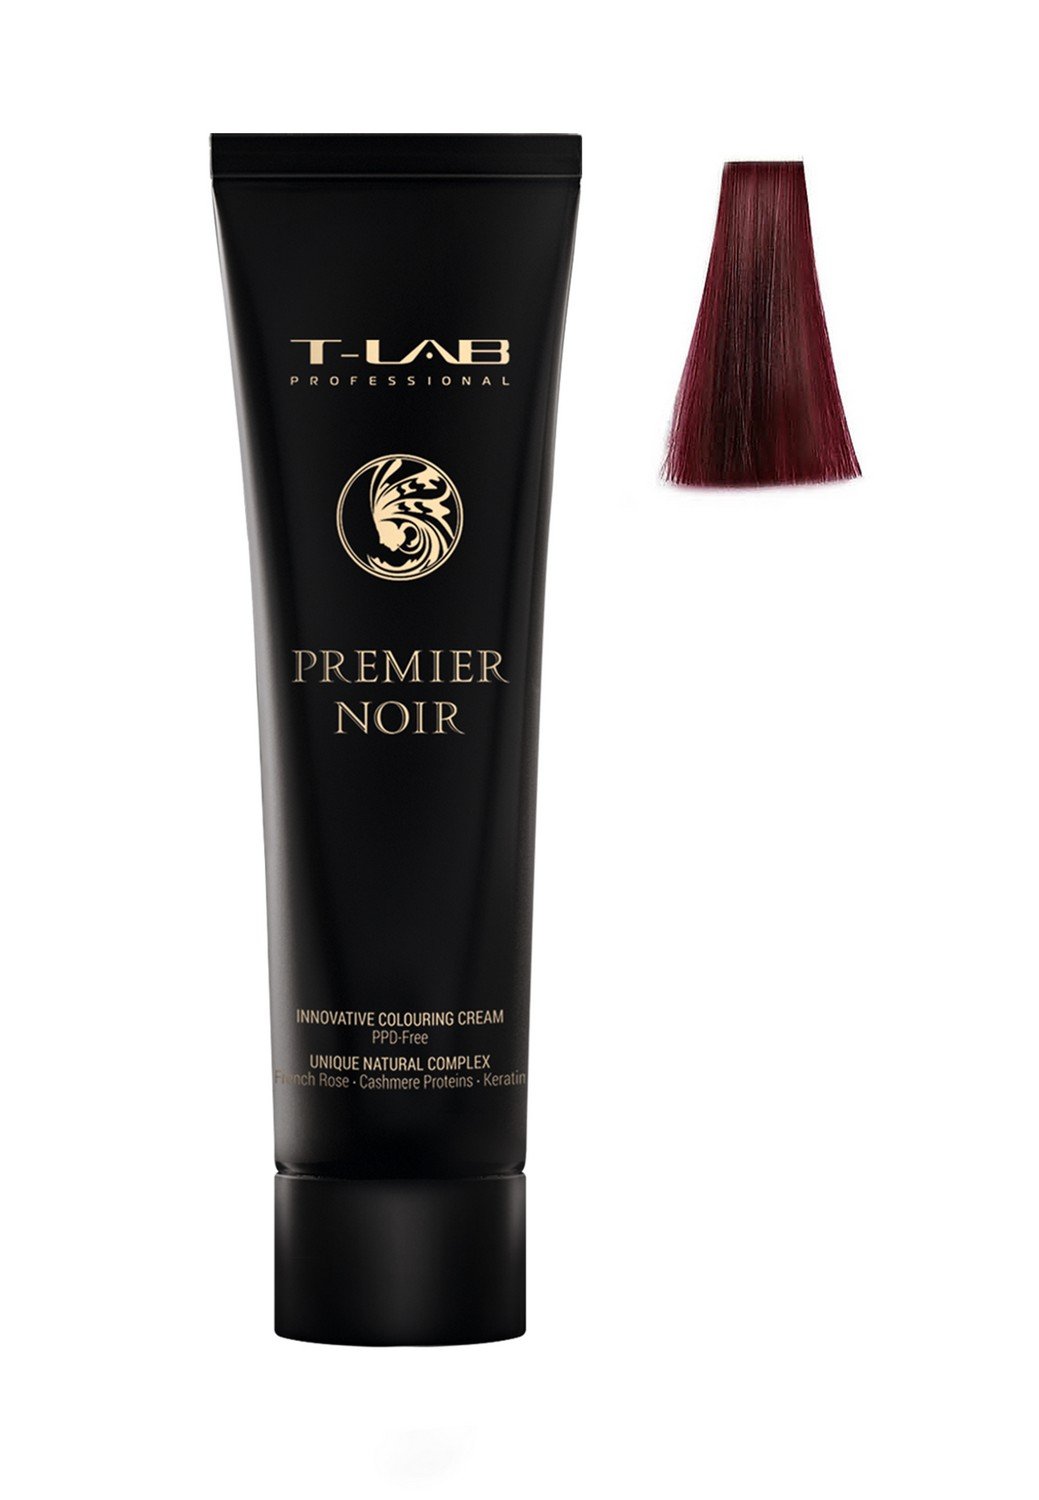 Крем-краска T-LAB Professional Premier Noir colouring cream, оттенок 7.44 (deep copper blonde) - фото 2